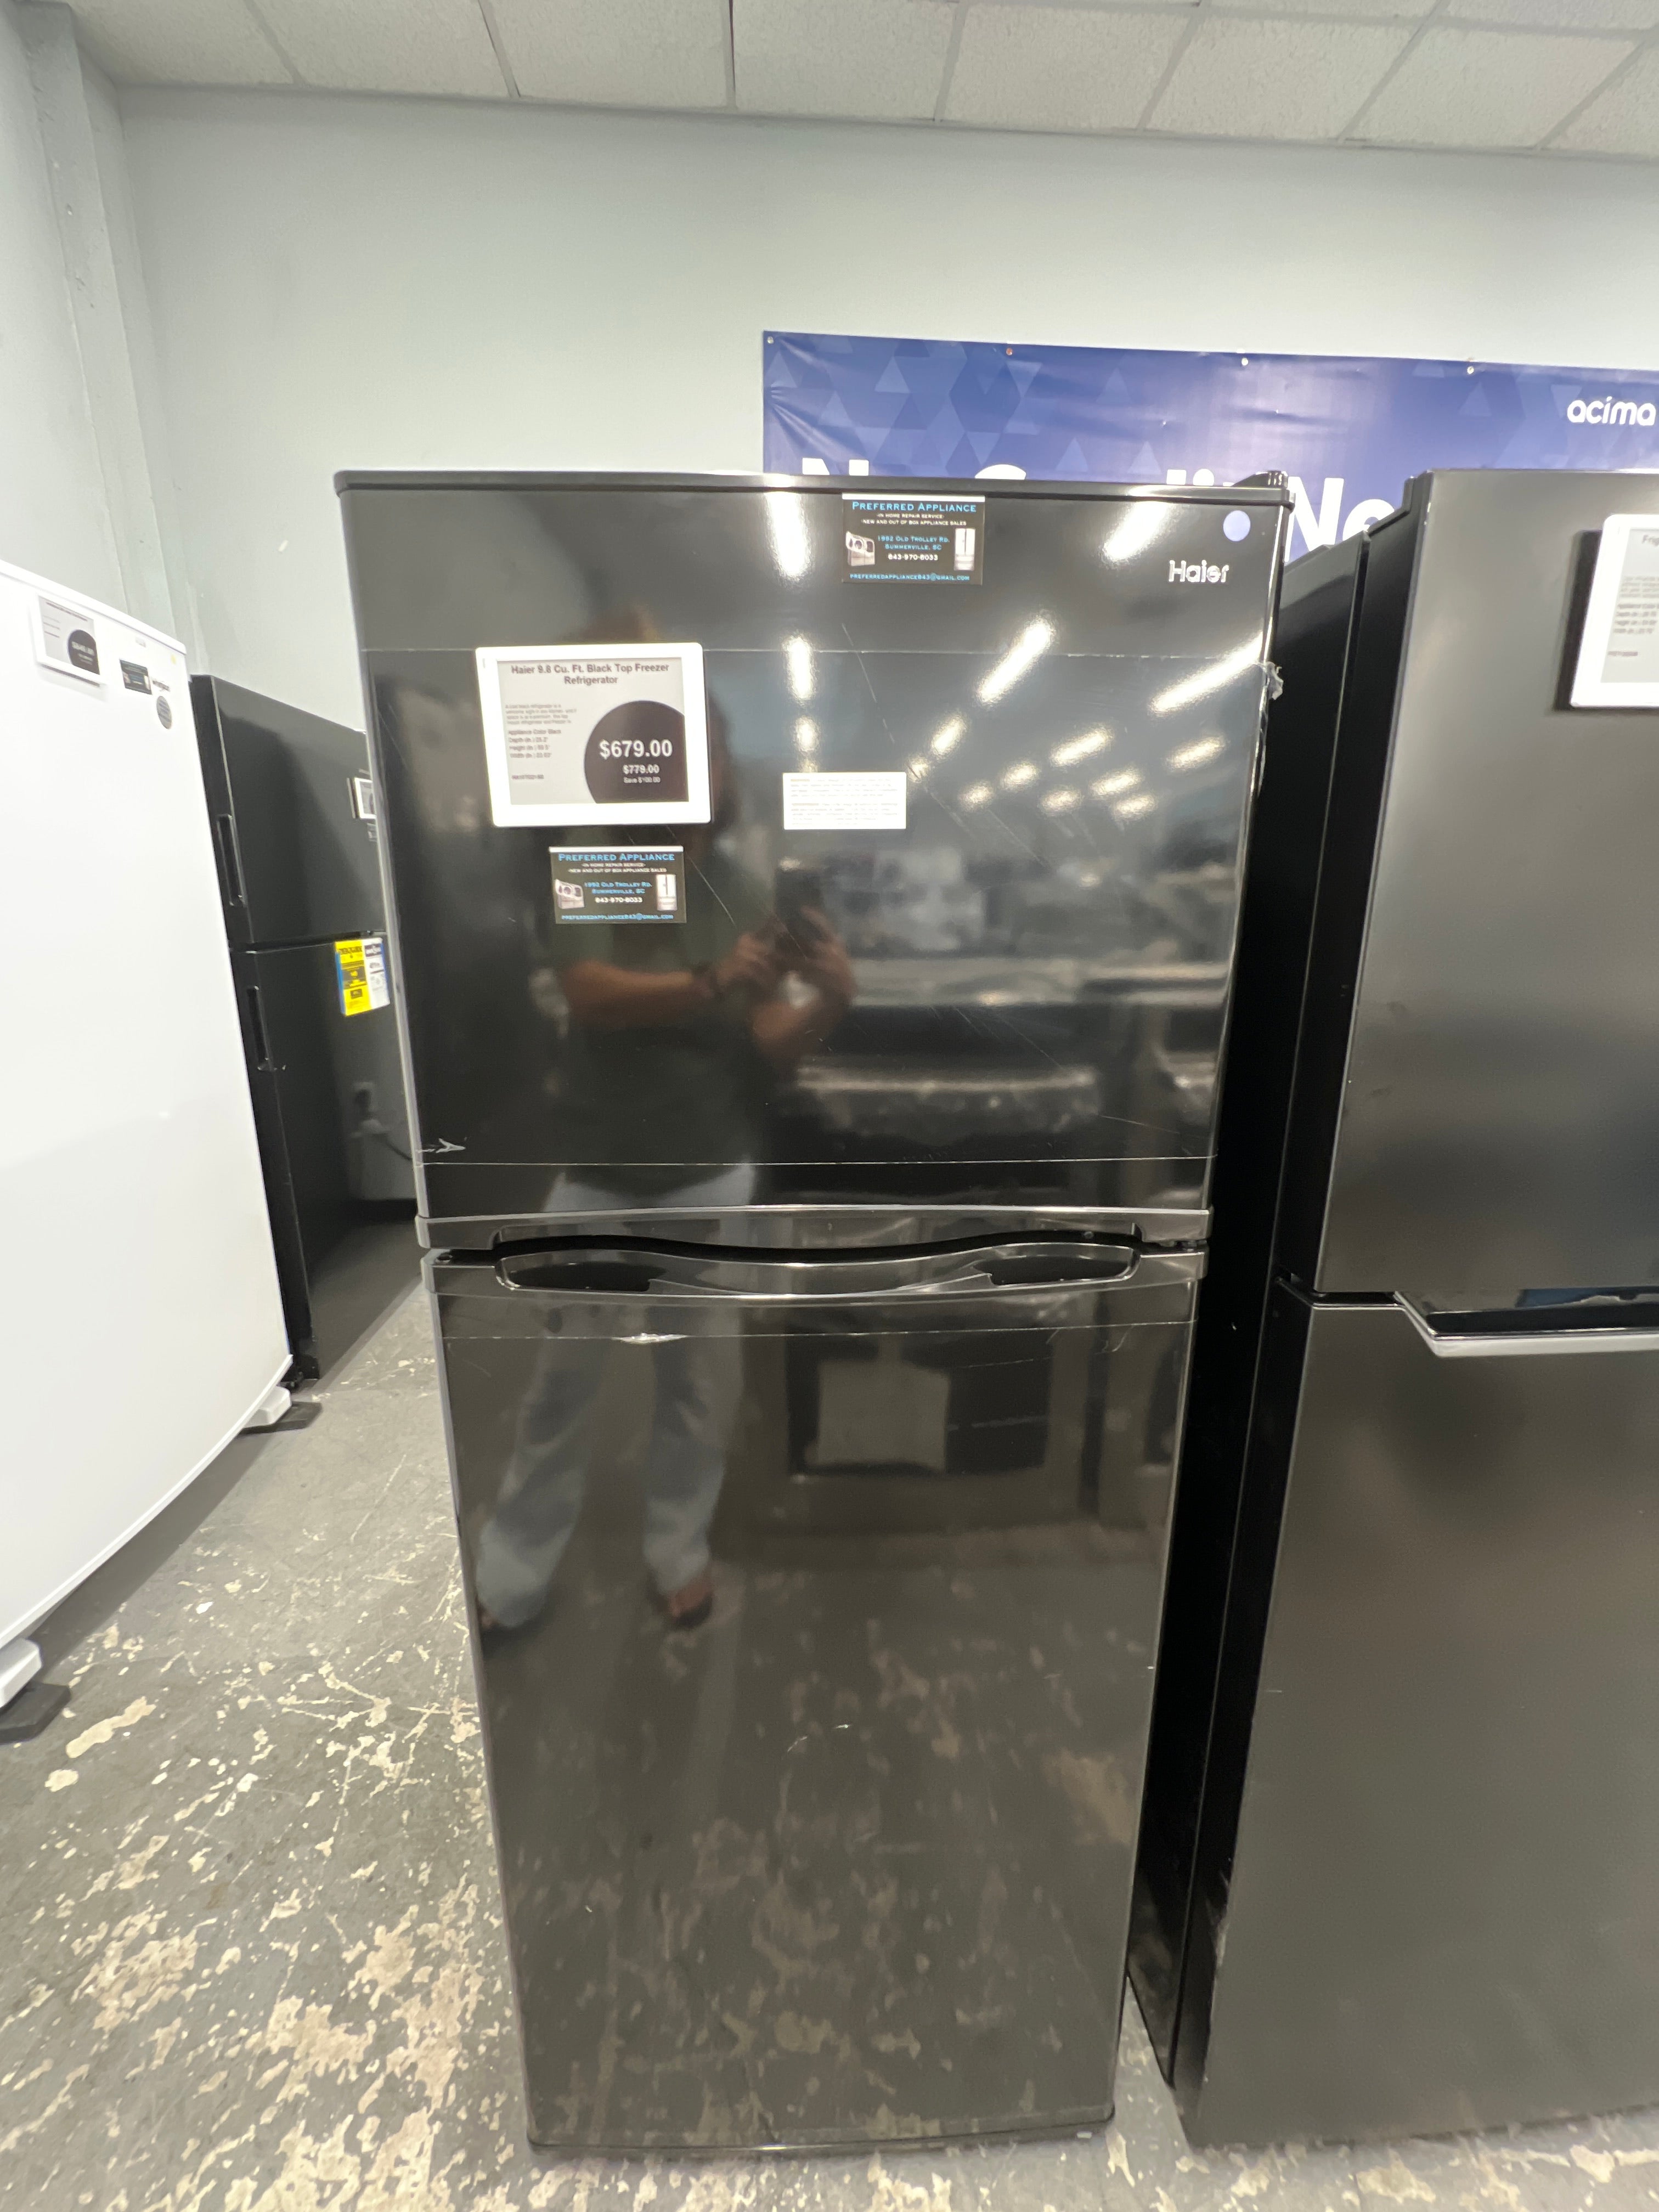 Haier - HA10TG21SB - 9.8 Cu. Ft. Top Freezer Refrigerator-HA10TG21SB